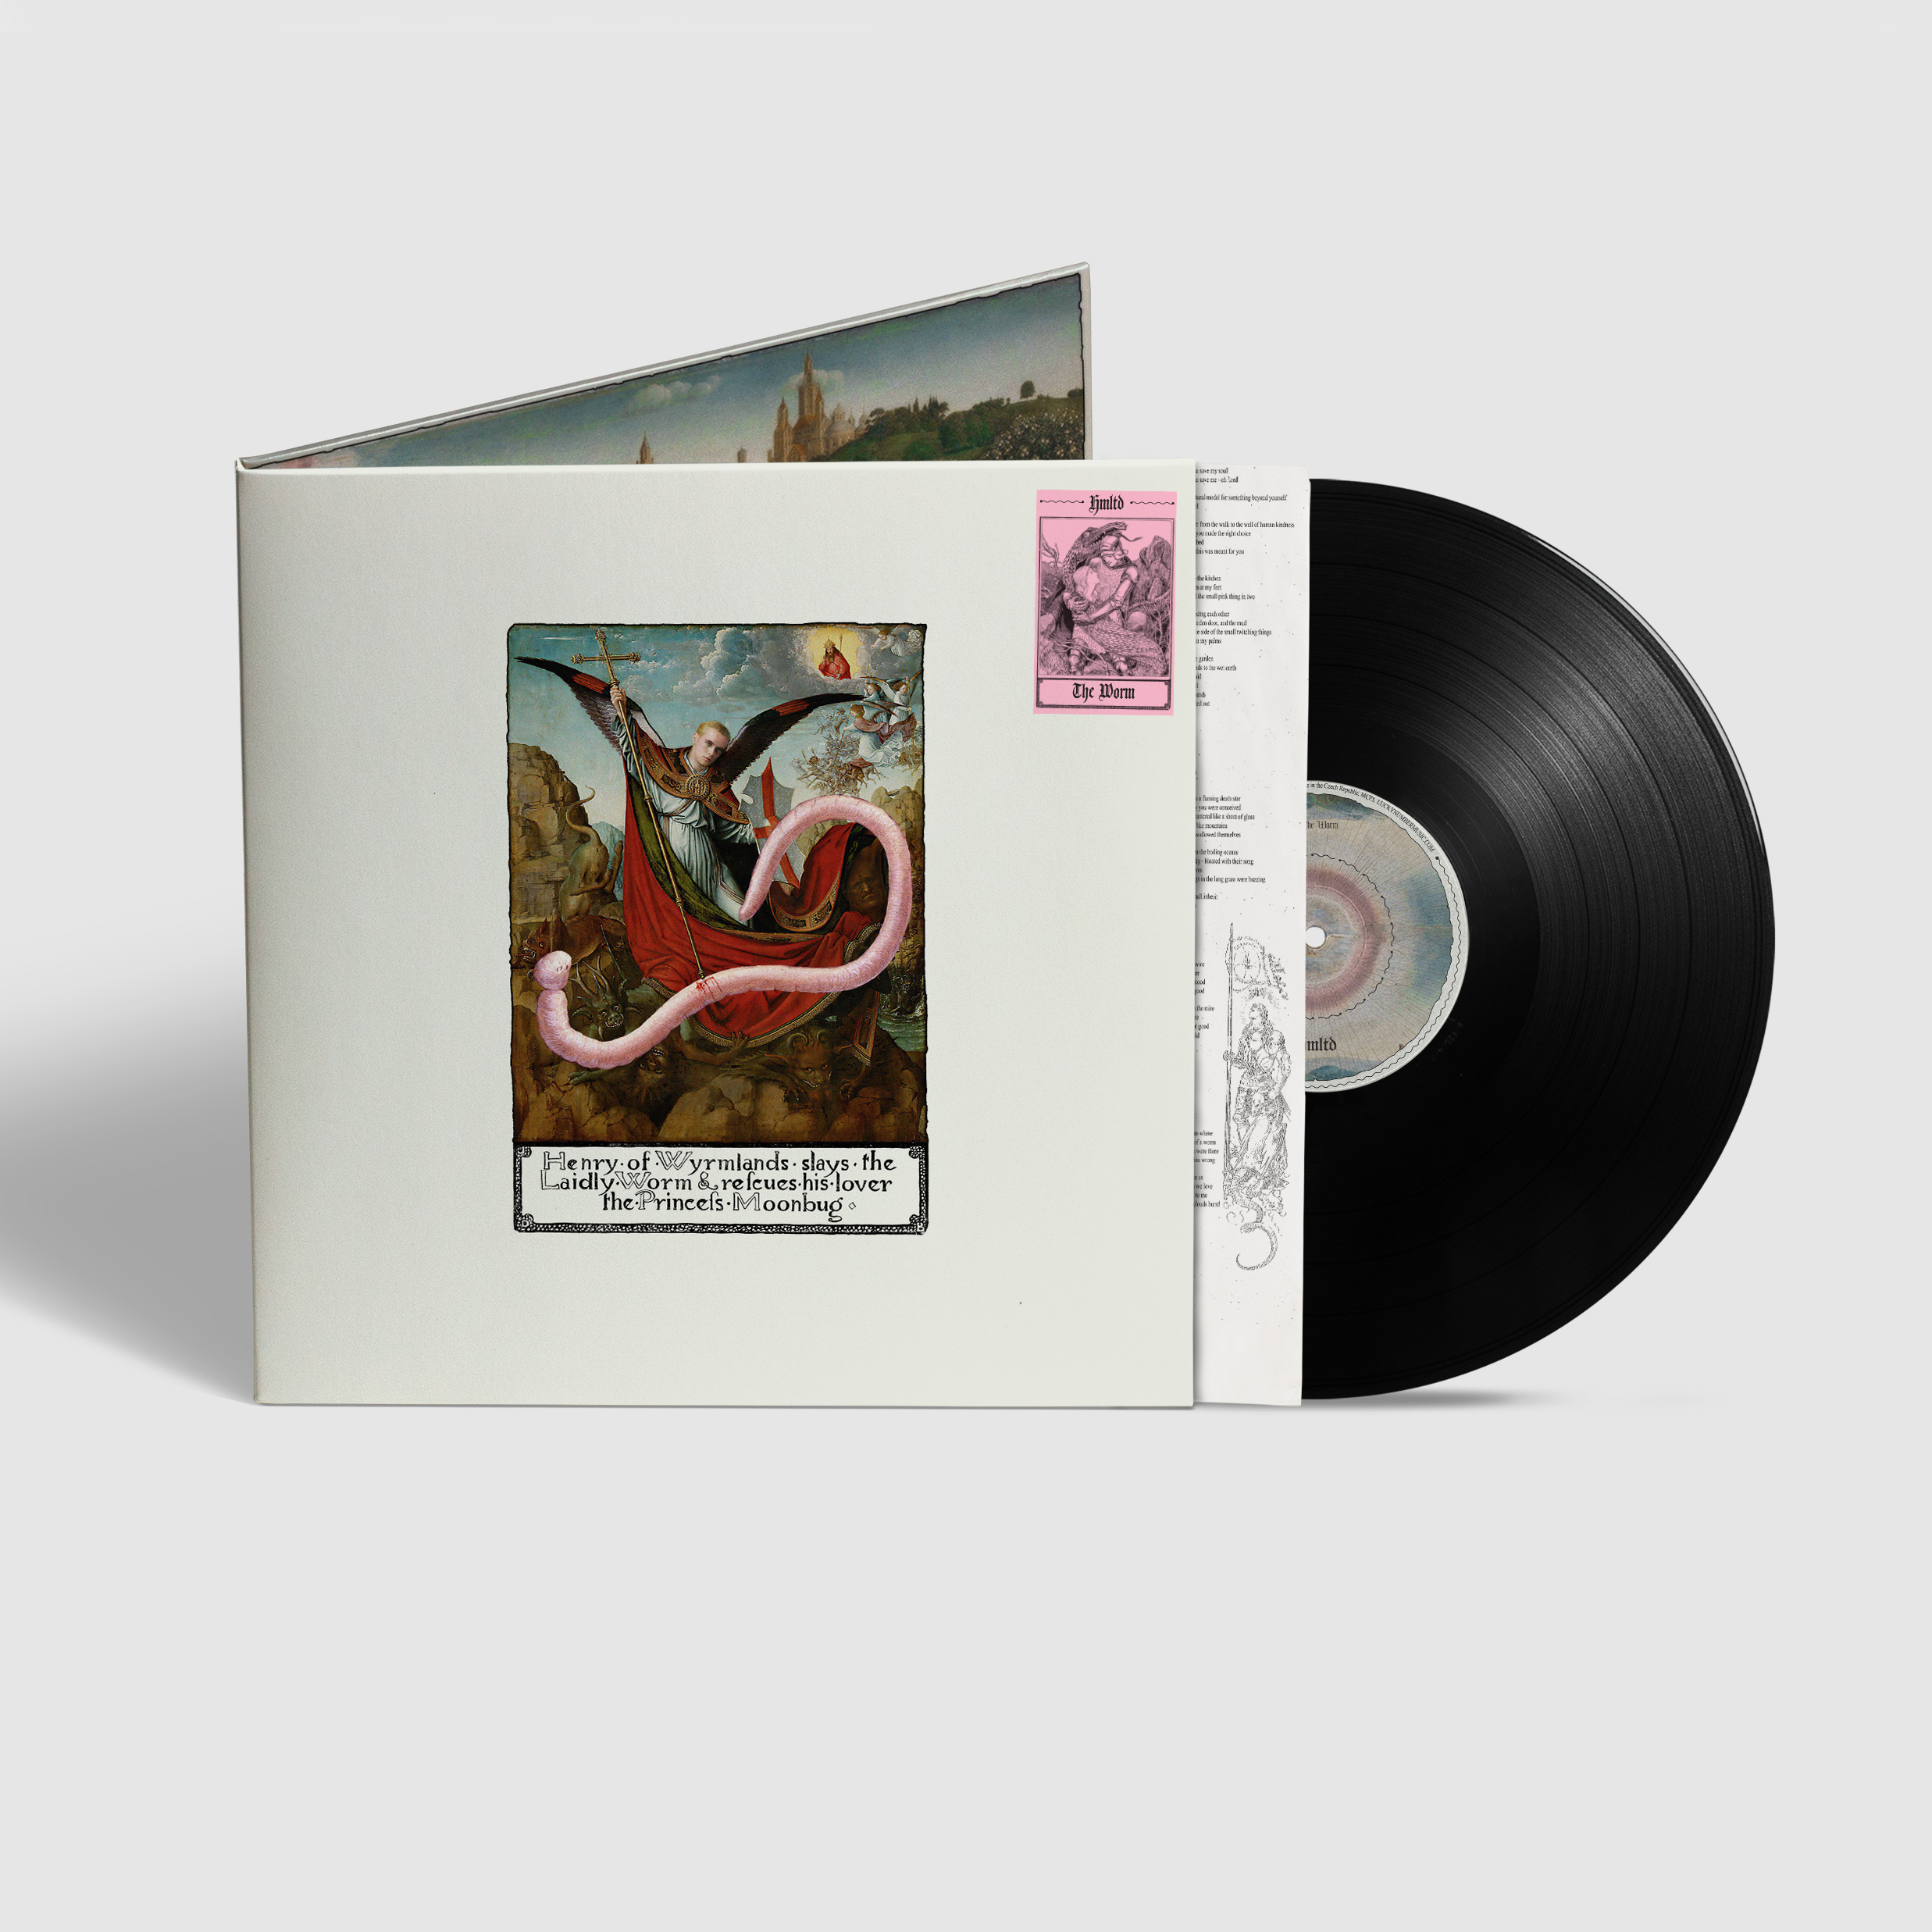 HMLTD - The Worm: Black Vinyl LP